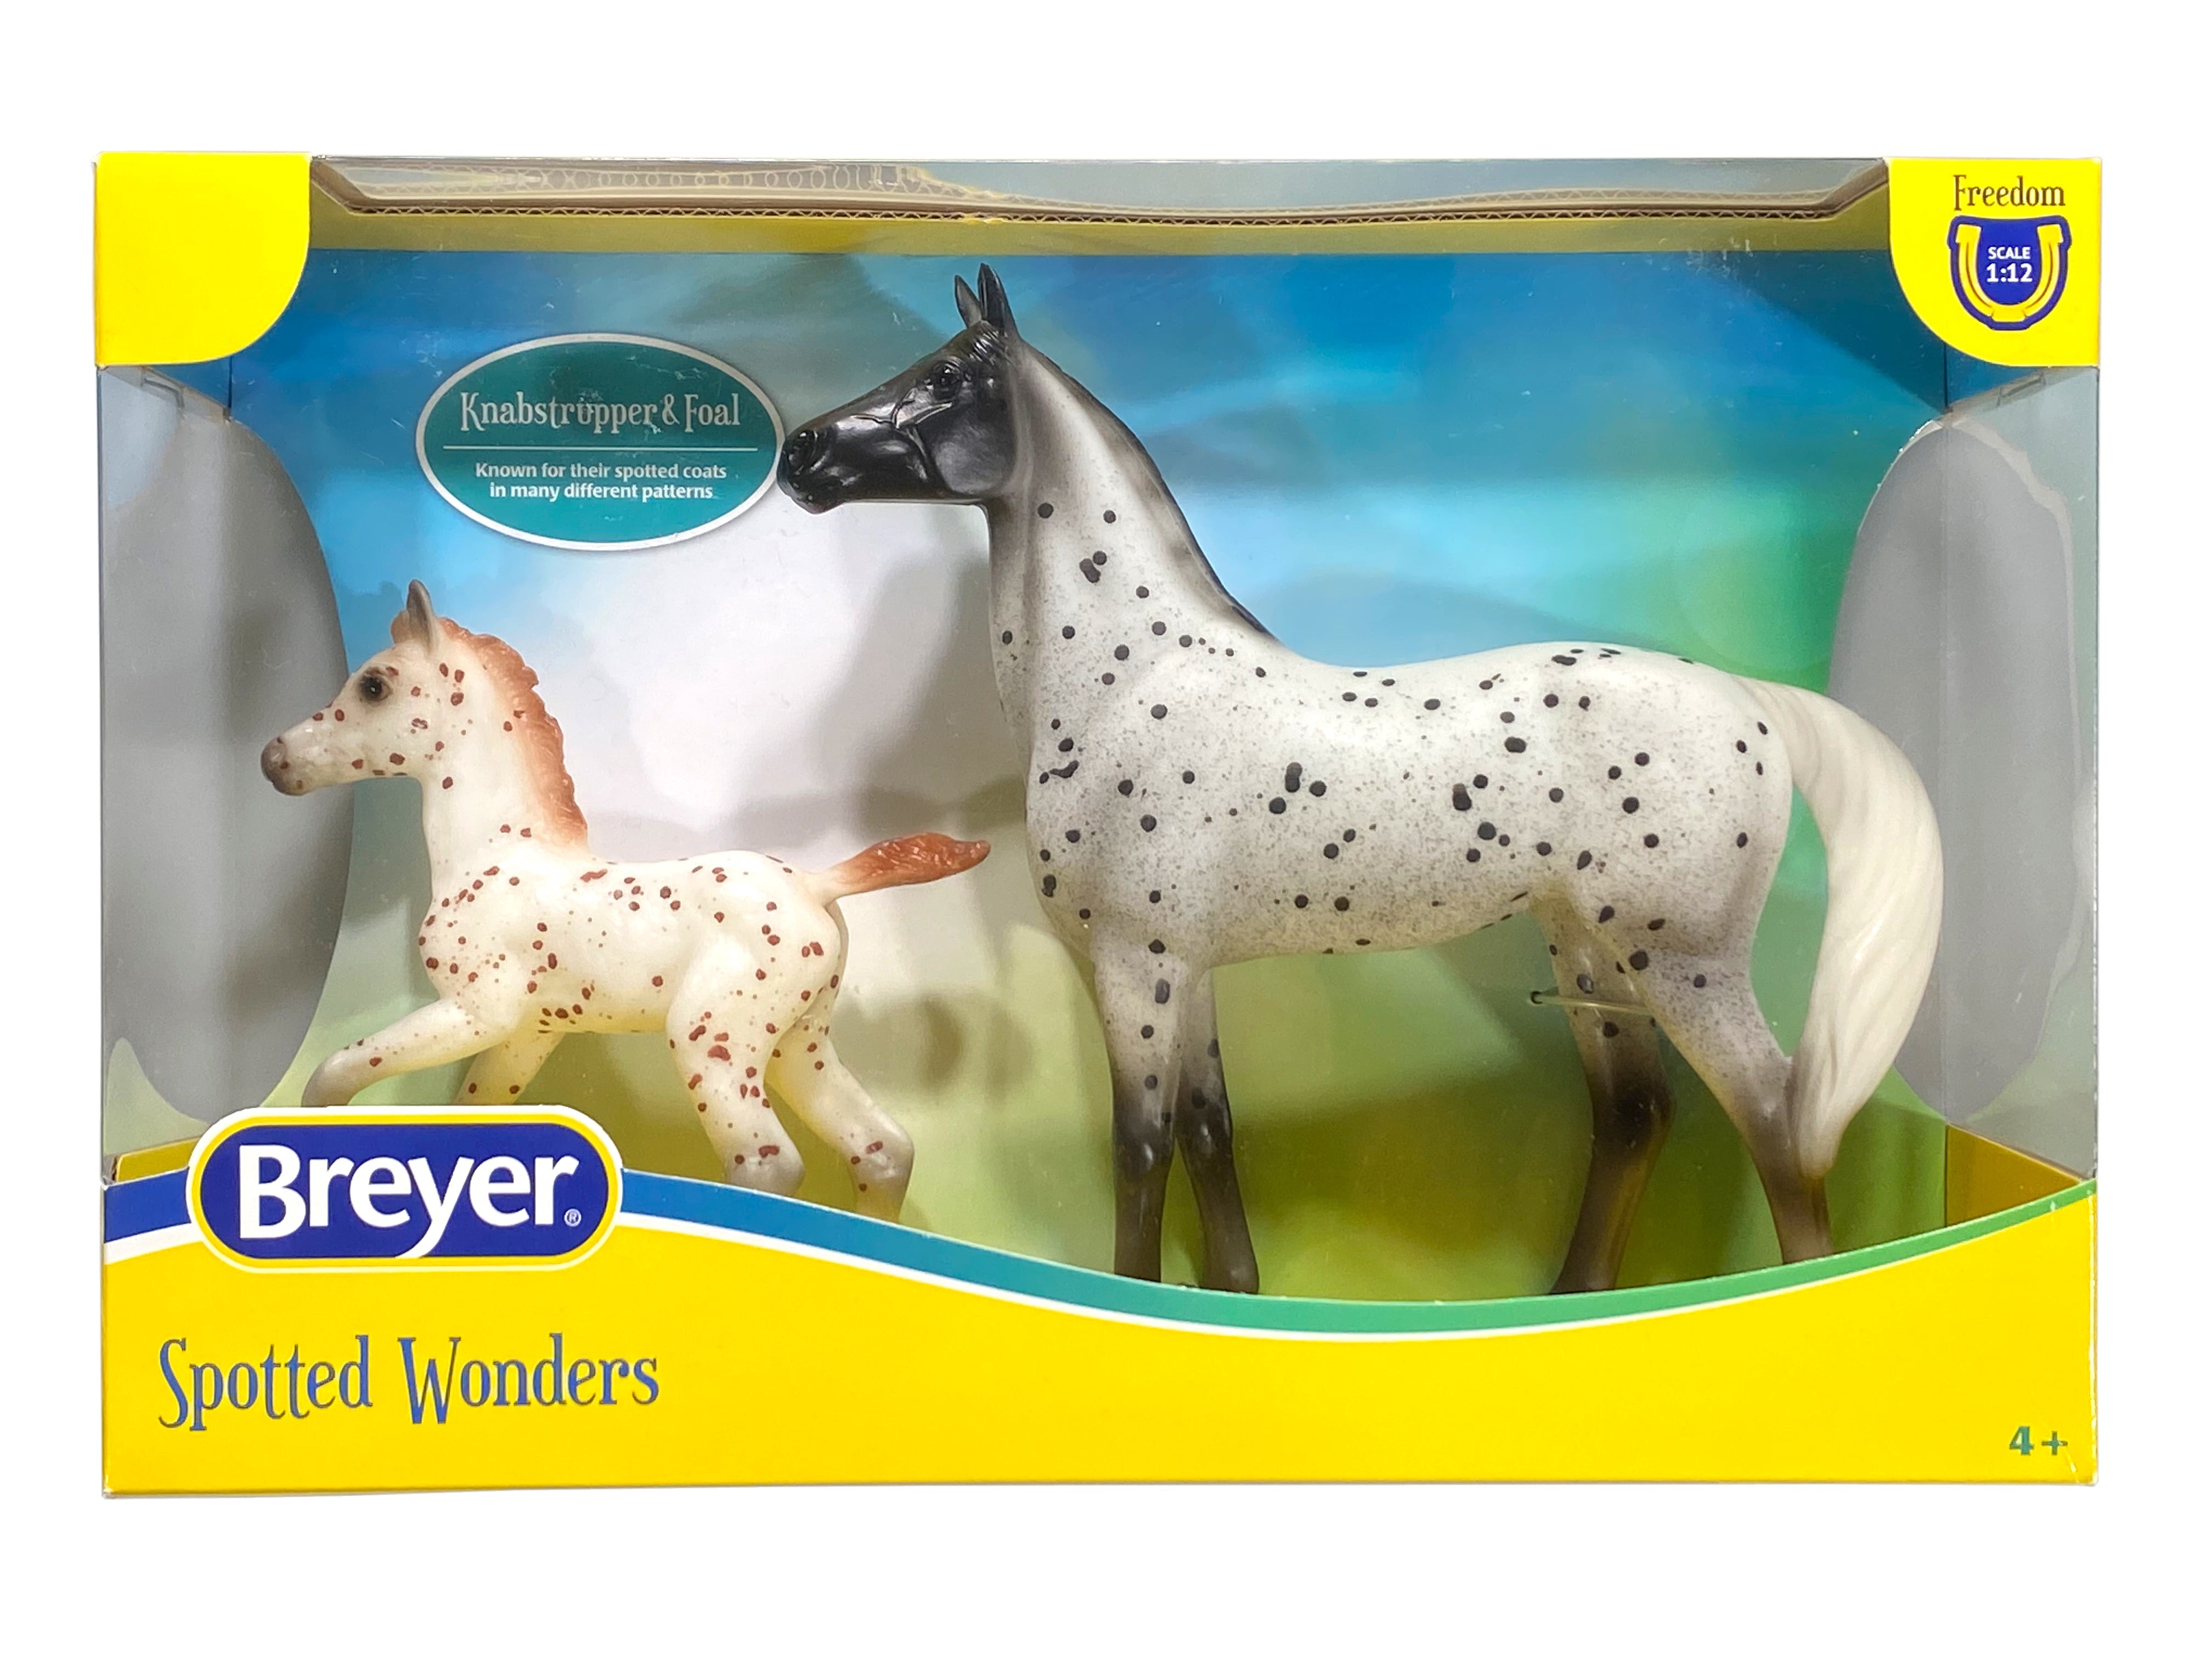 Breyer Freedom Series - Knabstrupper and Foal - Spotted Wonders    